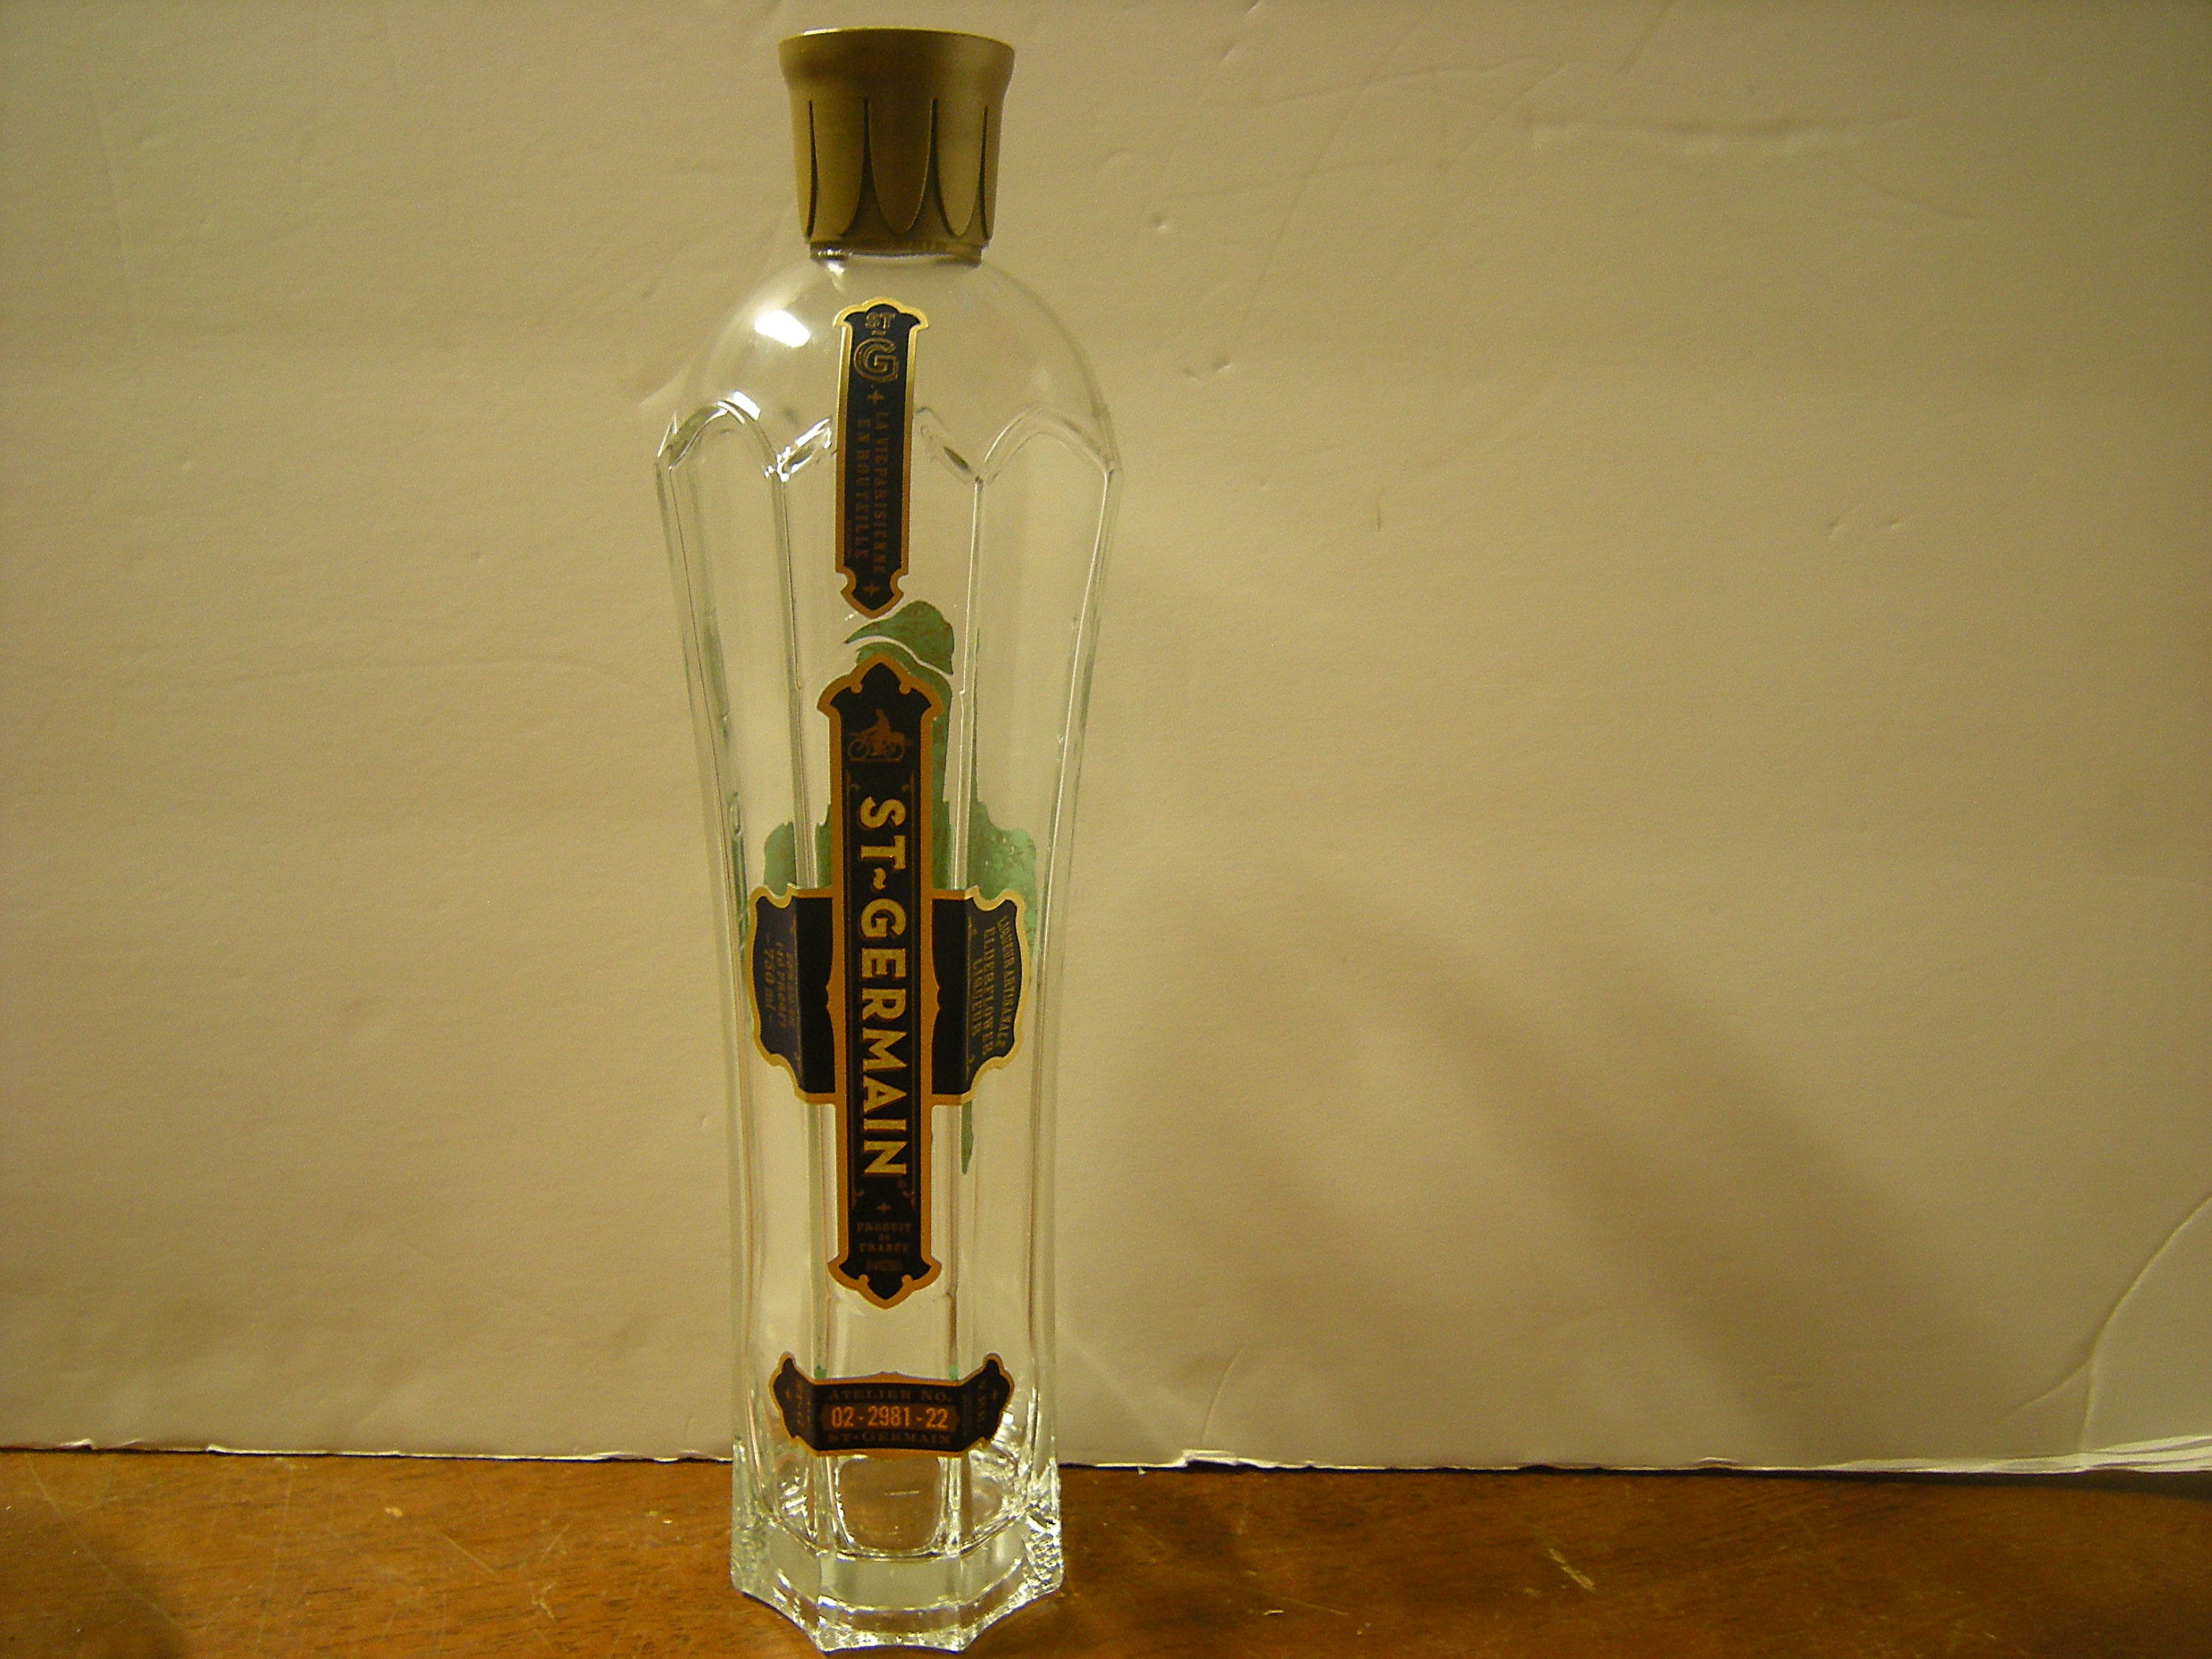 St. Germain Elderflower Liqueur 0.7L (20% Vol.) set with carafe